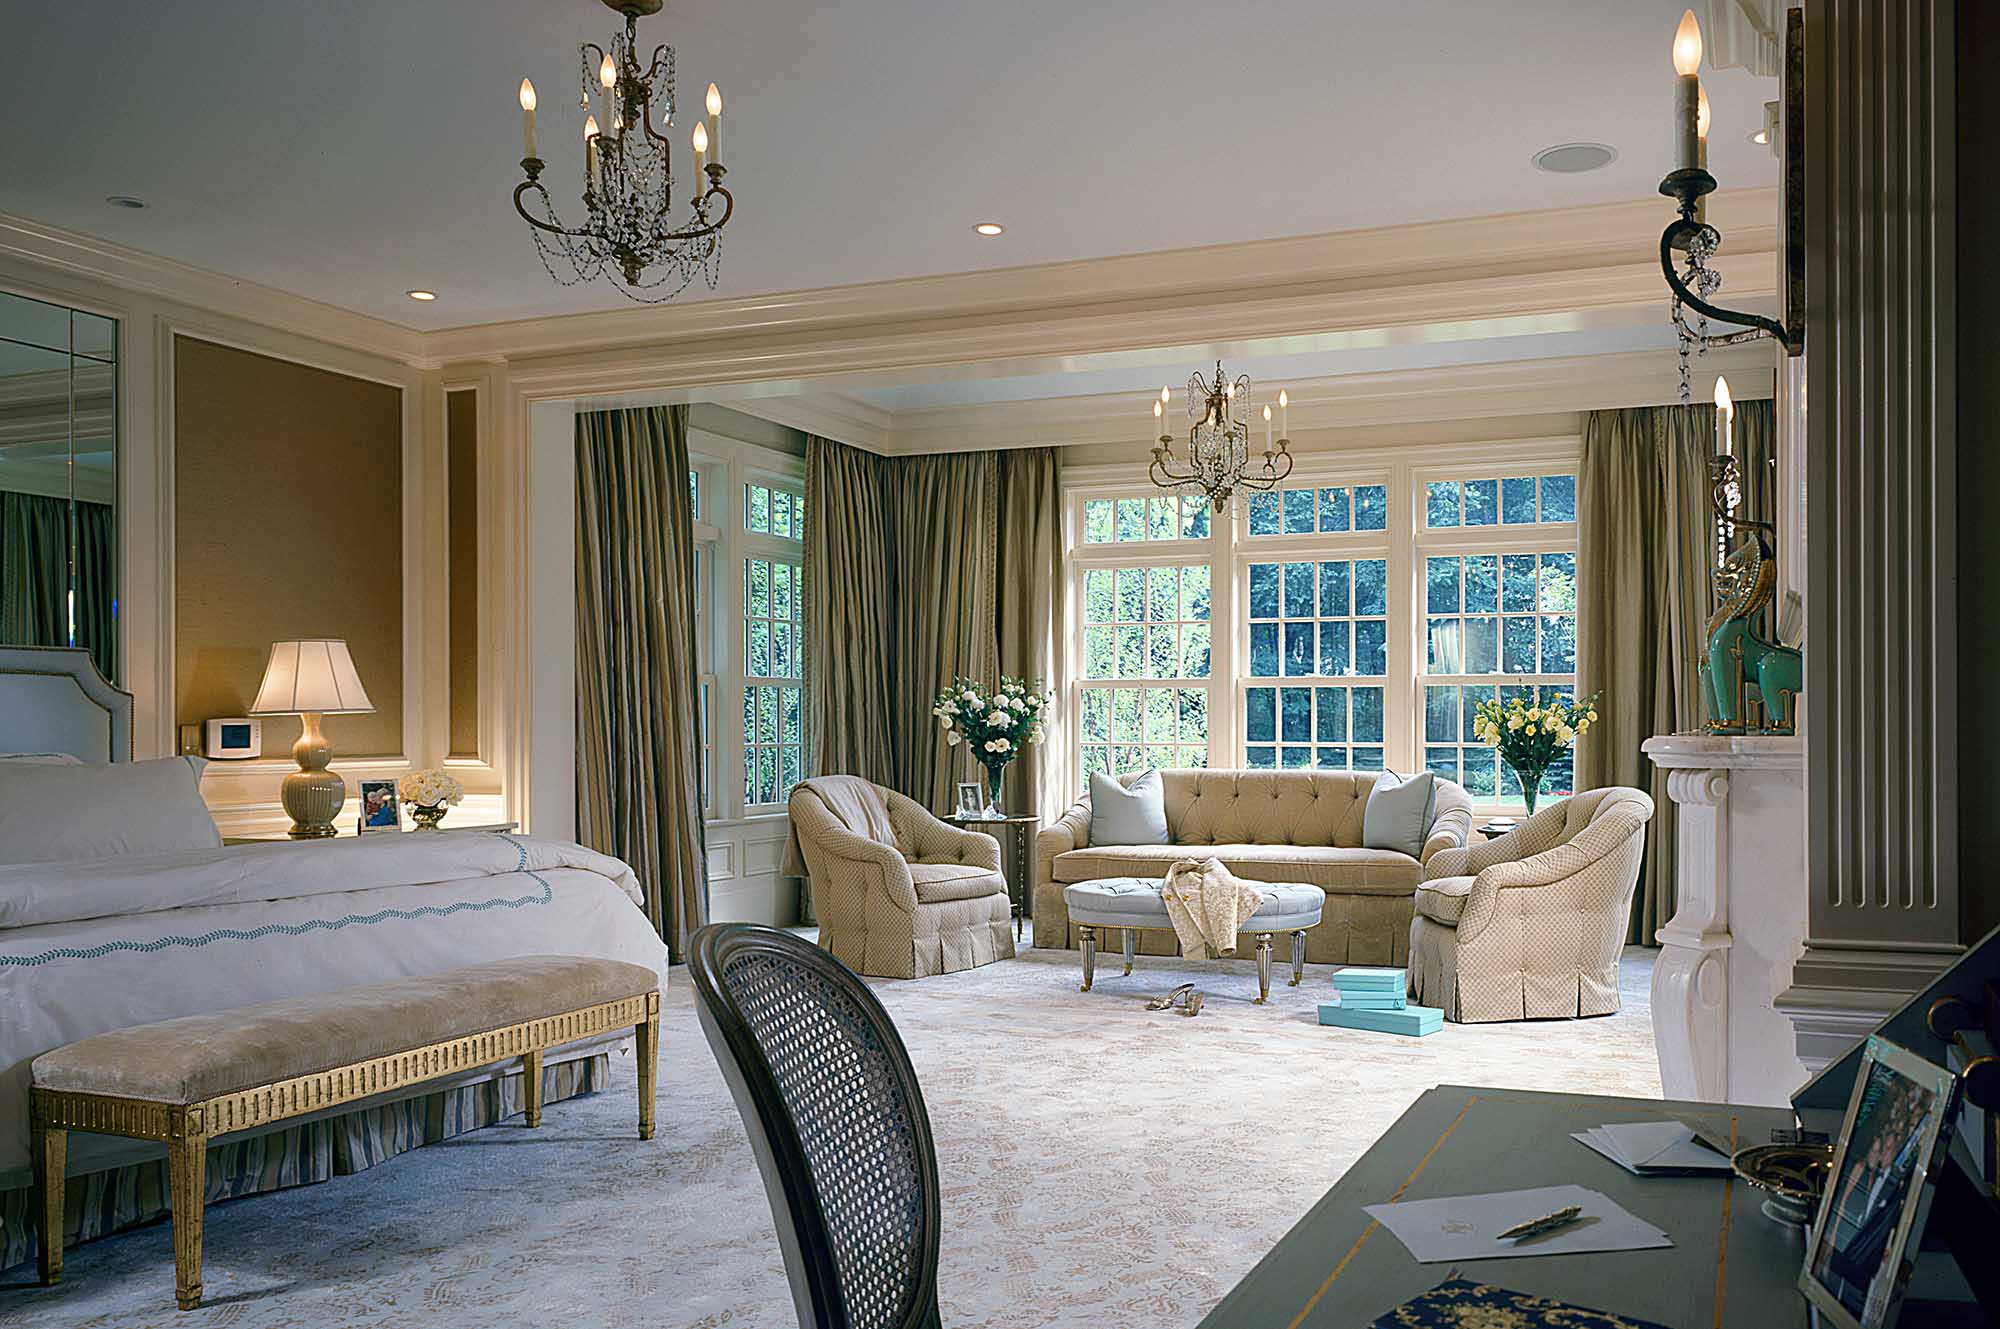 Long Island, Master bedroom, traditional, gold leaf, sitting area